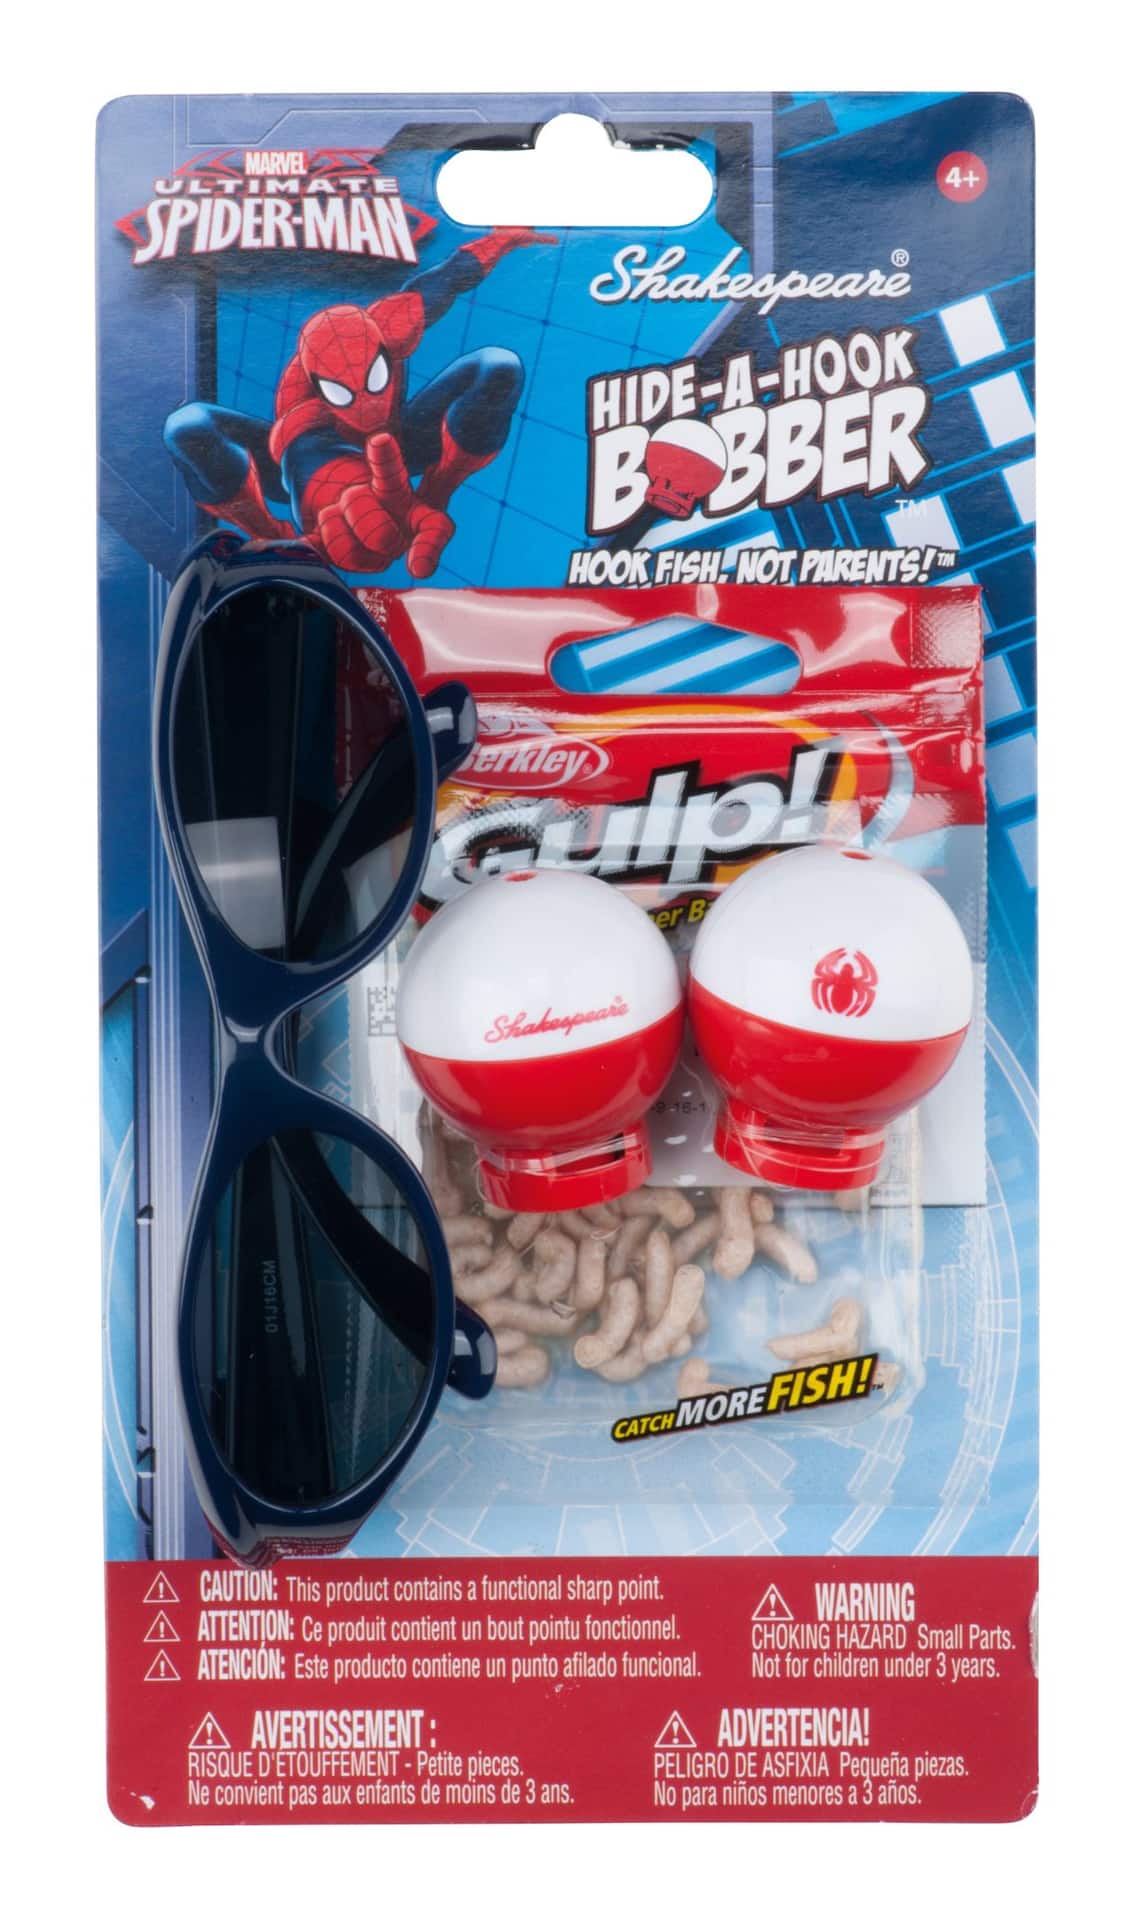 Shakespeare Hide-A-Hook Bobber™ Fishing Accessory Kit, Spiderman